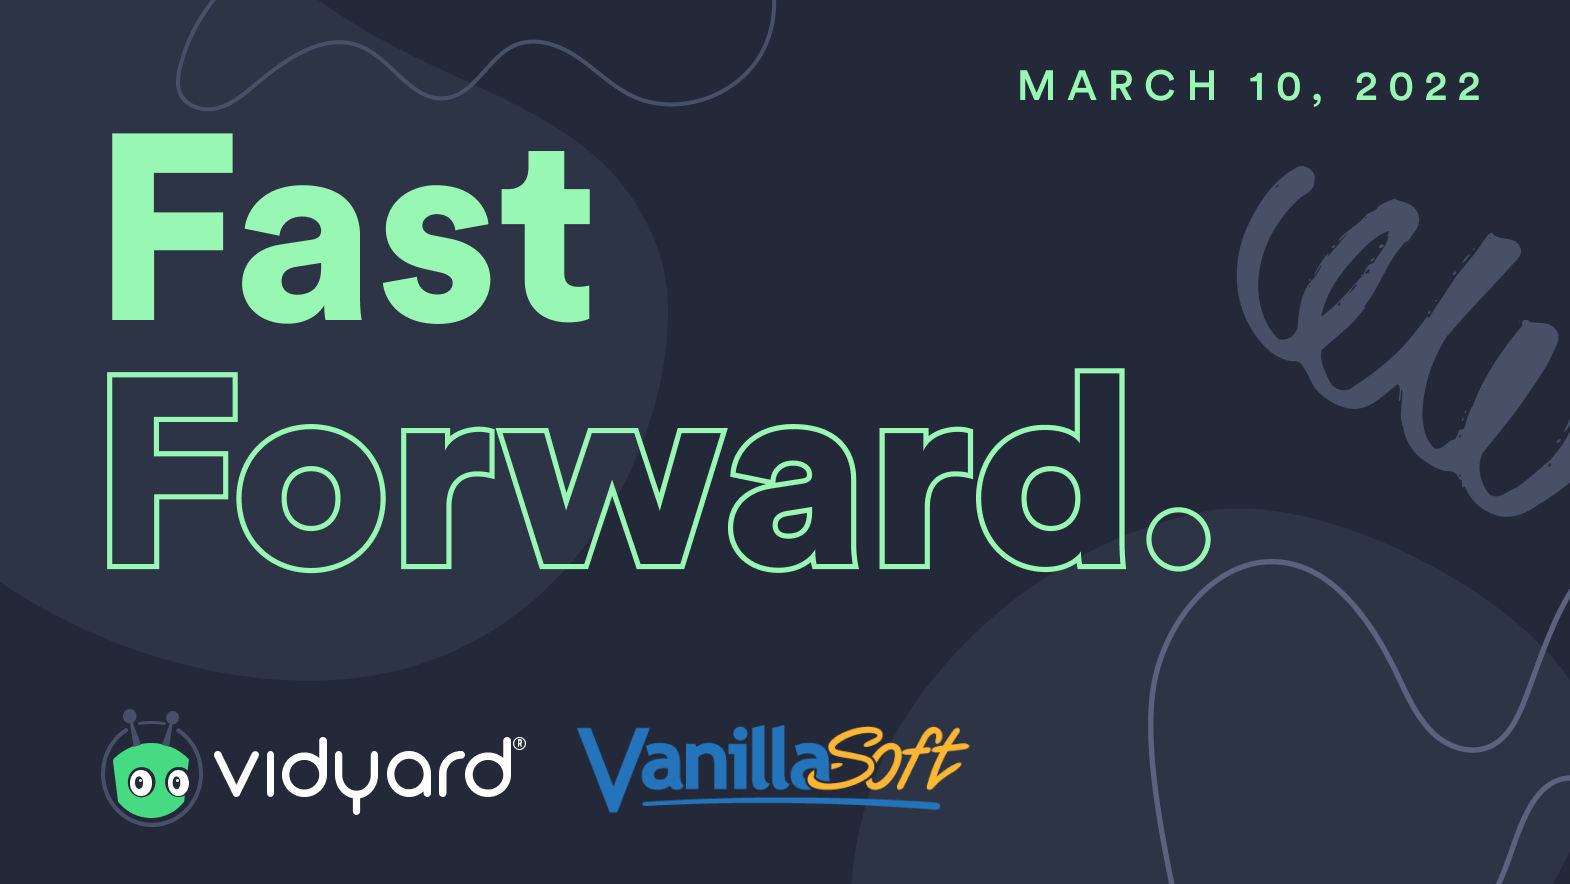 Vidyard's Fast Forward Conference